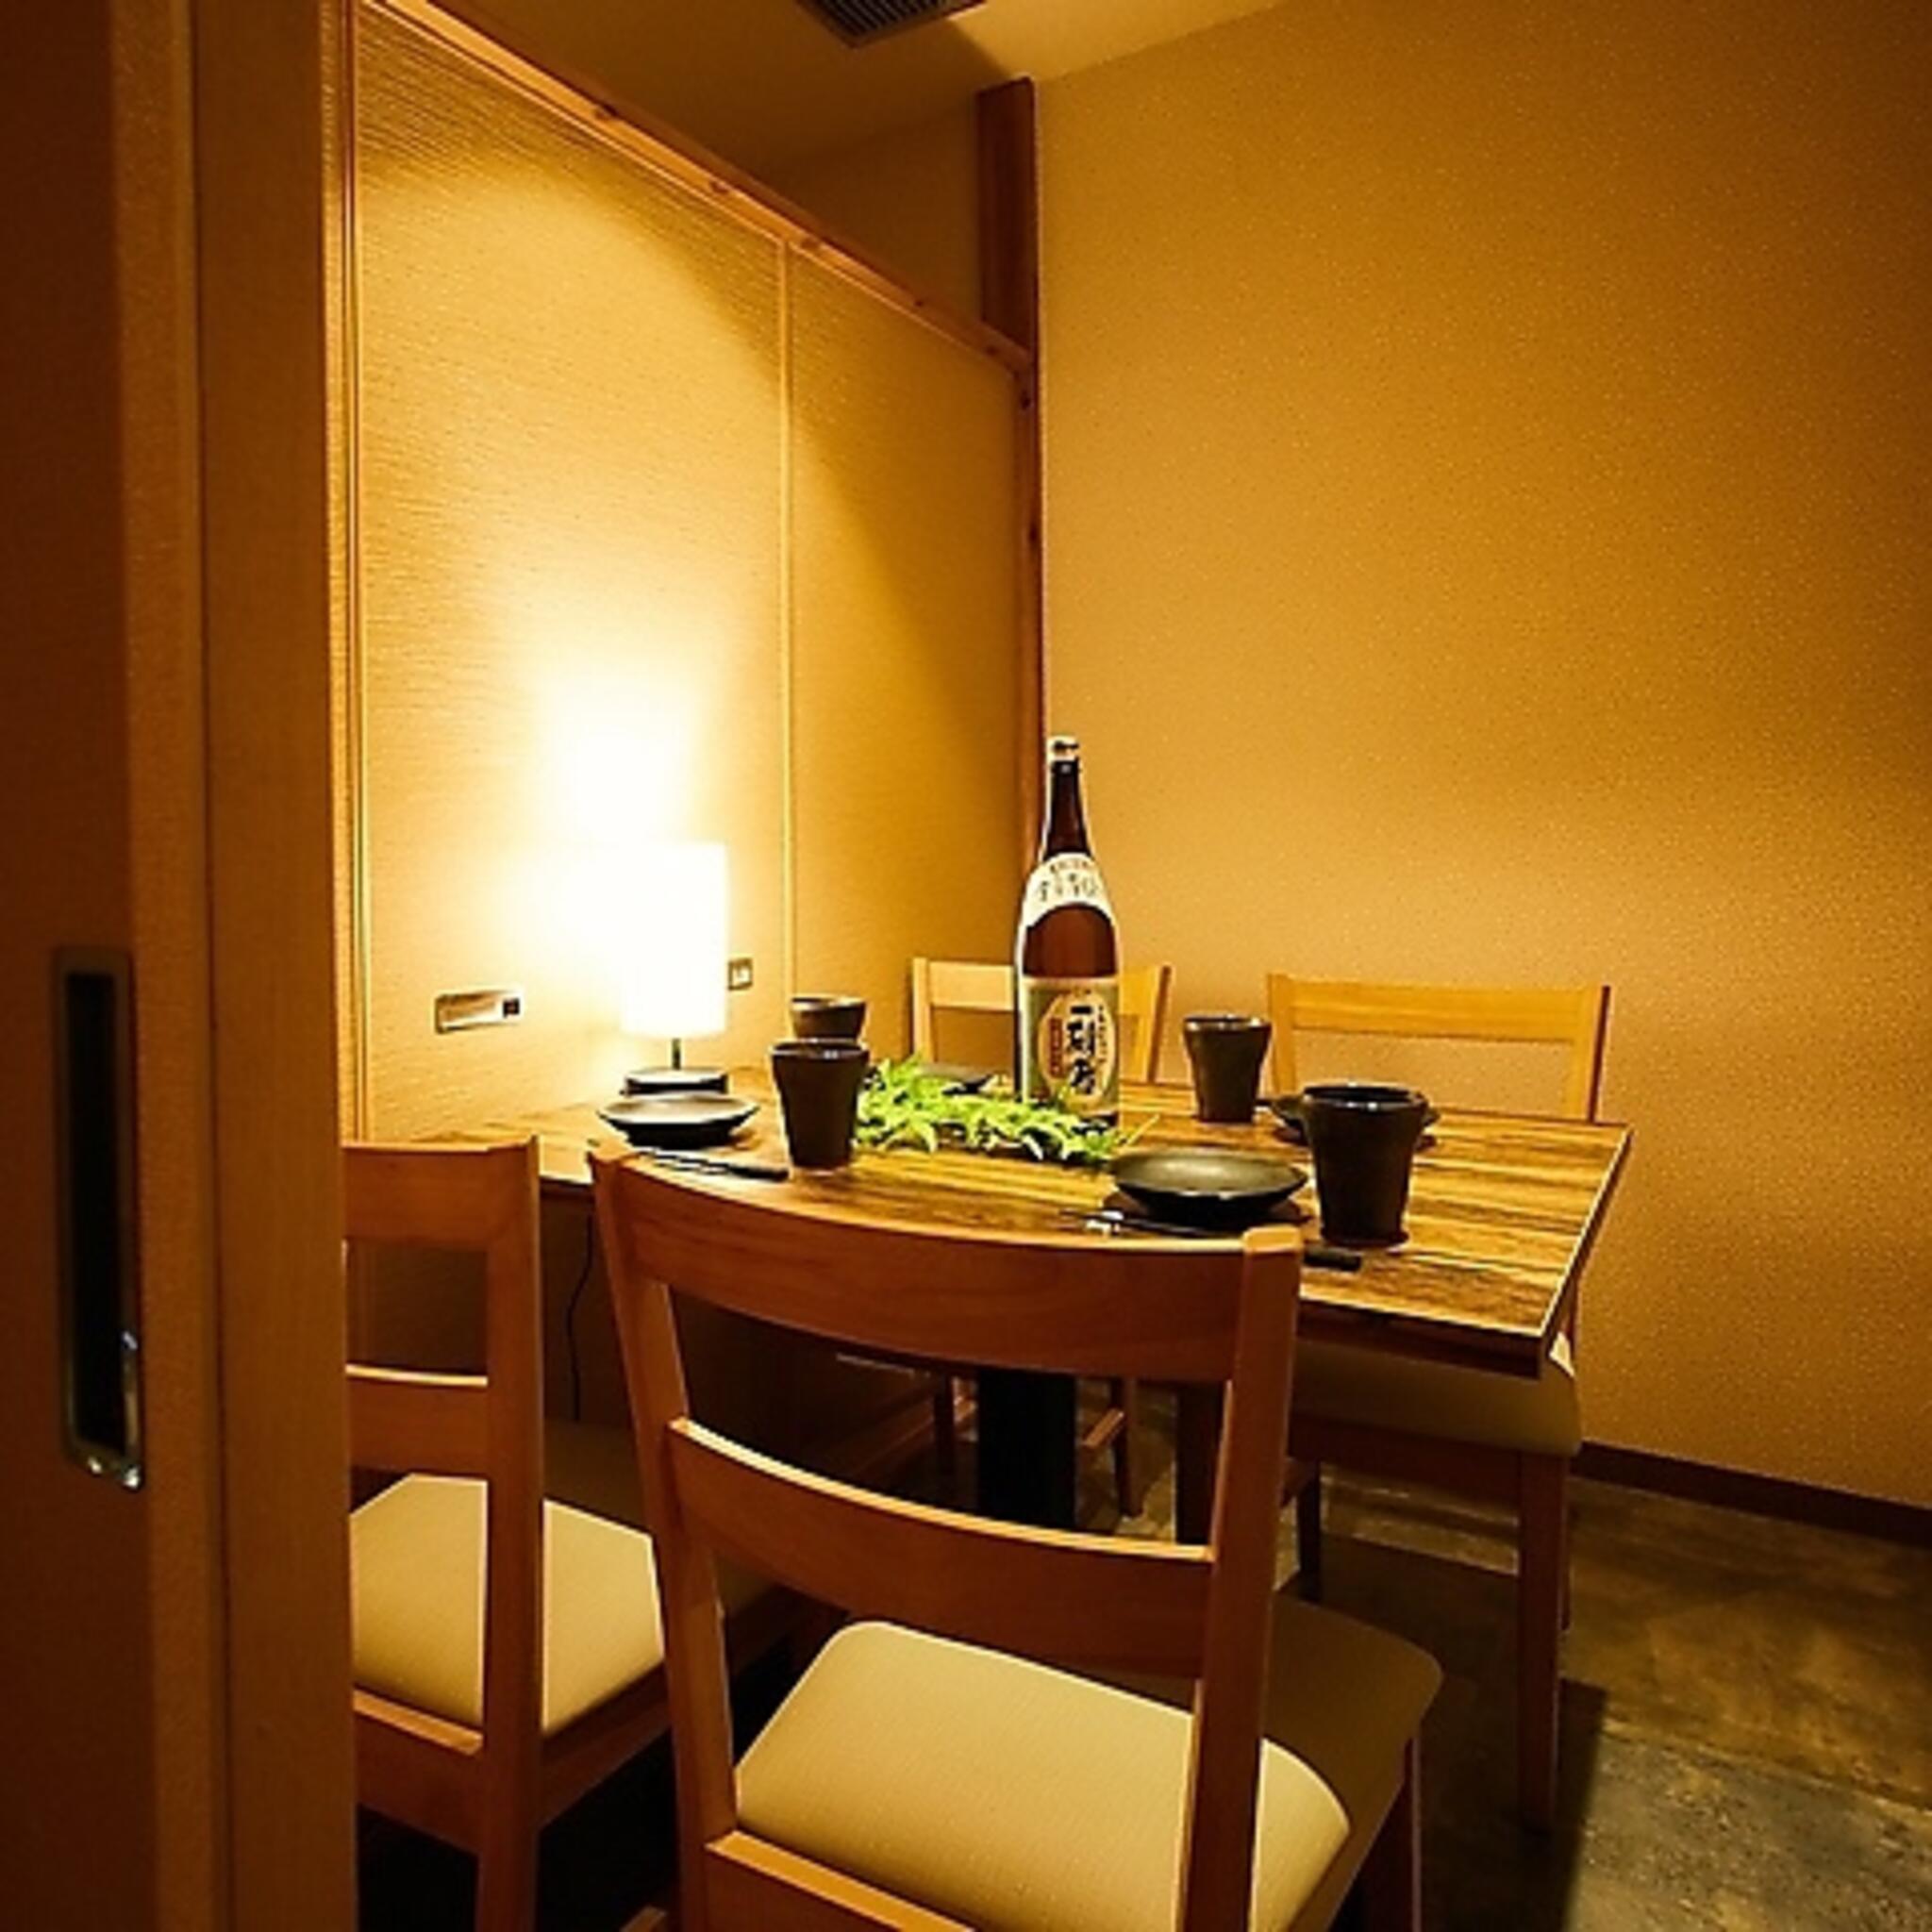 博多もつ鍋と個室居酒屋 九州 情熱屋 赤坂見附店の代表写真6